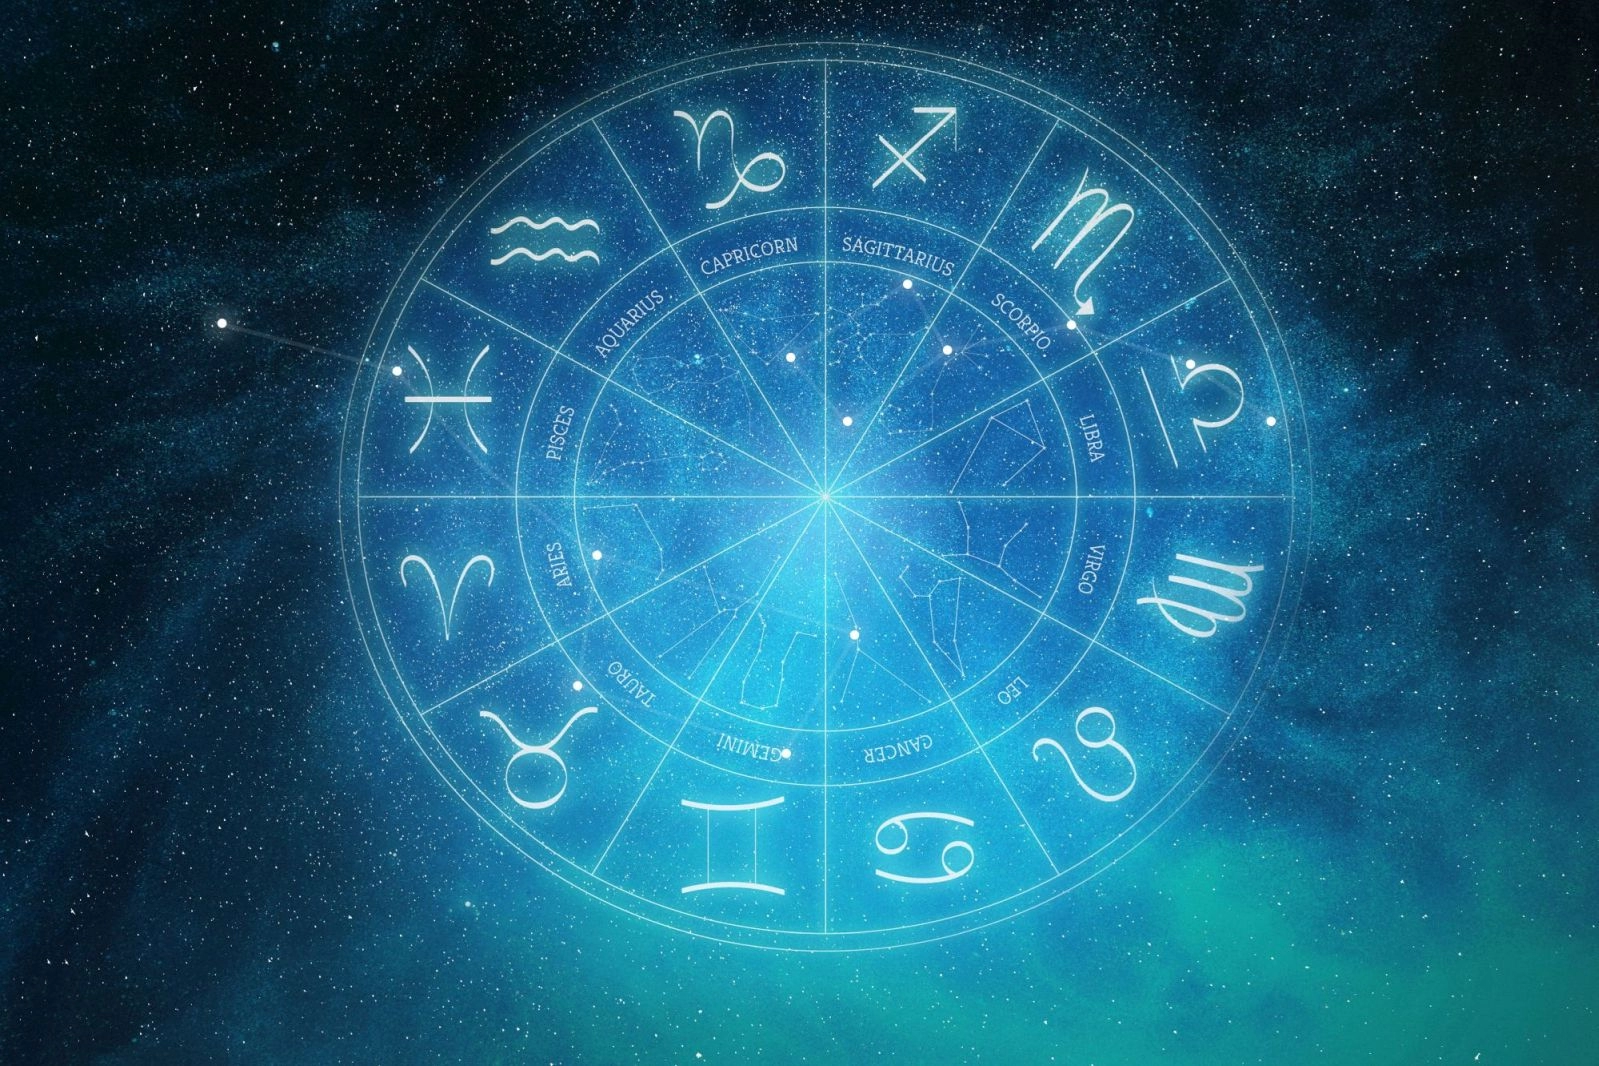 Dnevni horoskop: Blizanci upoznaju nove ljude